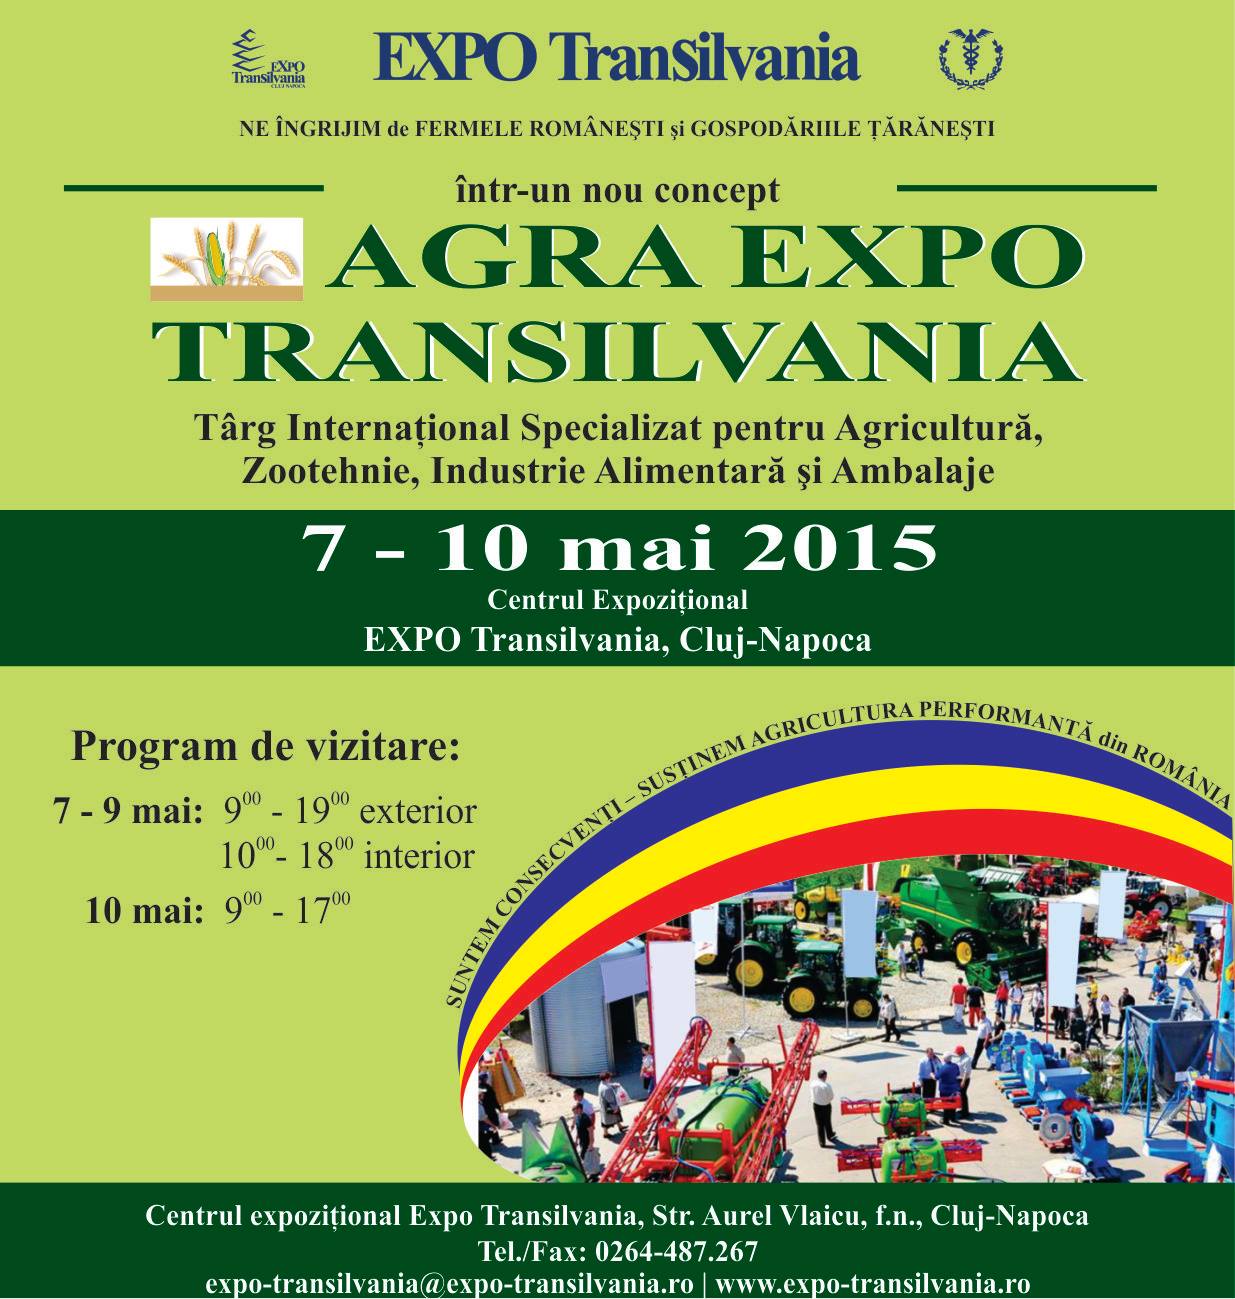 AGRA EXPO TRANSILVANIA-cel mai important eveniment expozitional cu profil agricol din Transilvania